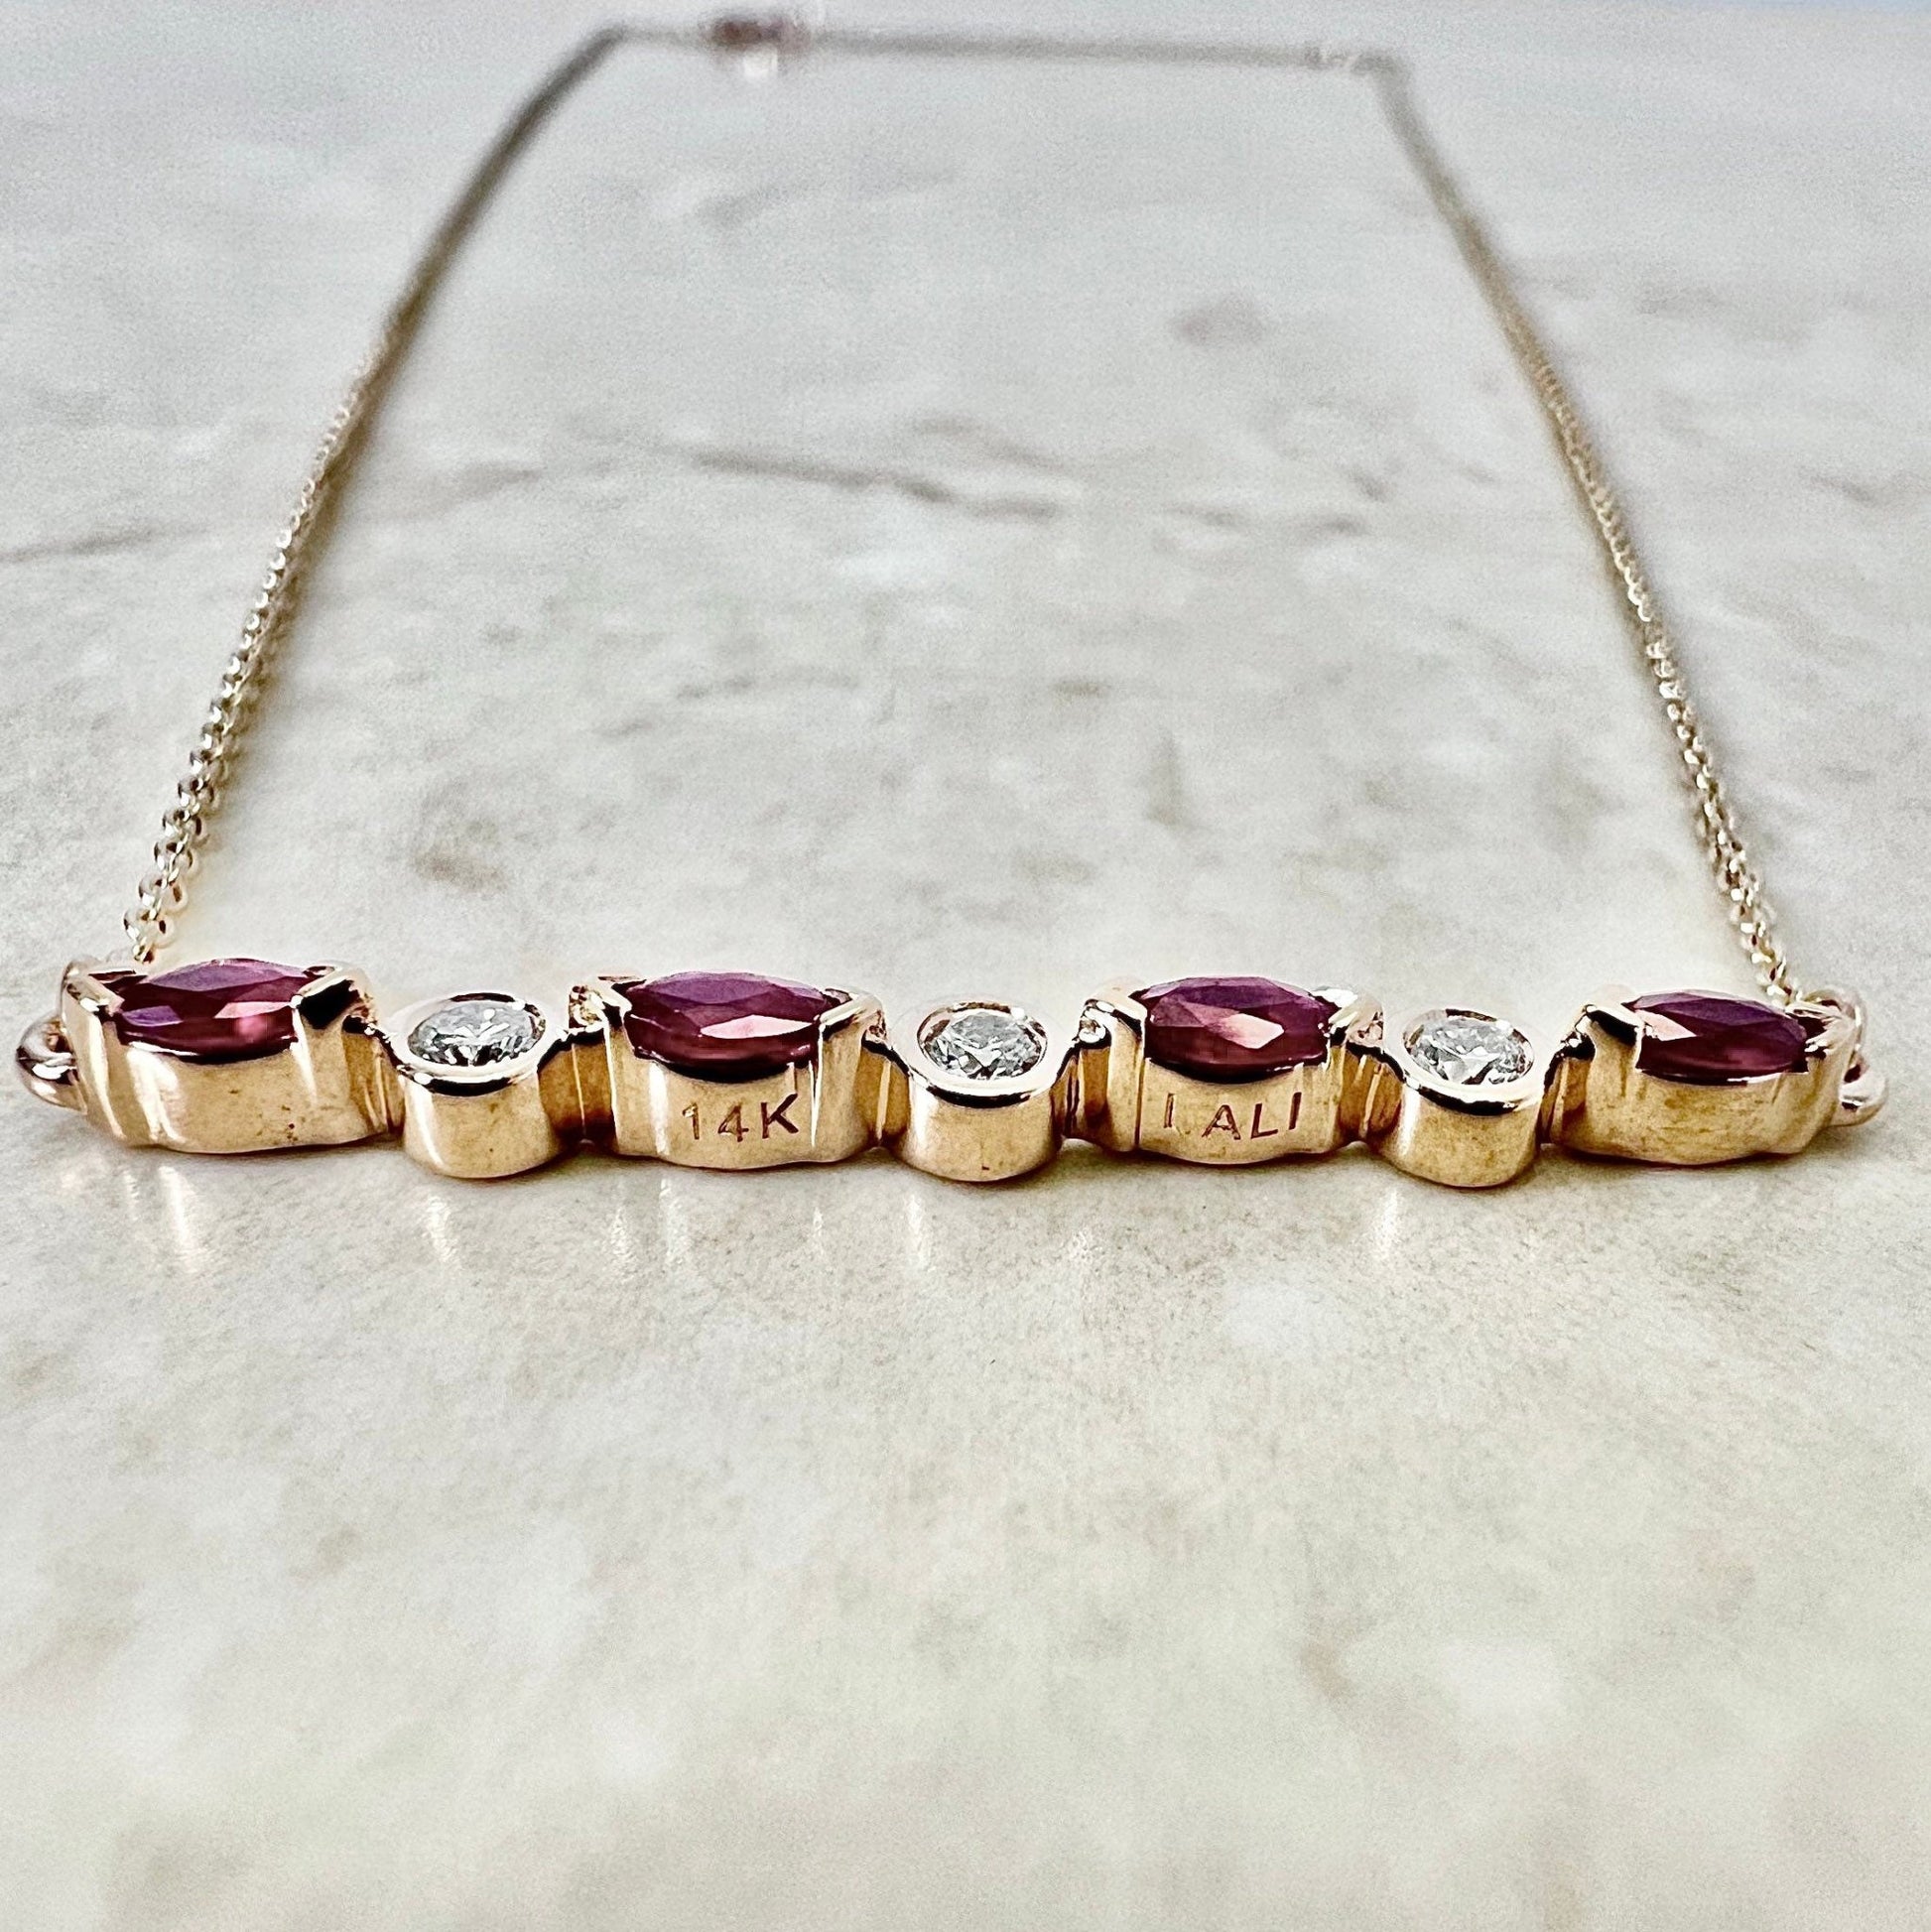 14K Ruby & Diamond Bar Pendant Necklace - Rose Gold Pendant Necklace - July Birthstone - Genuine Ruby - Holiday Gift - Birthday Gift